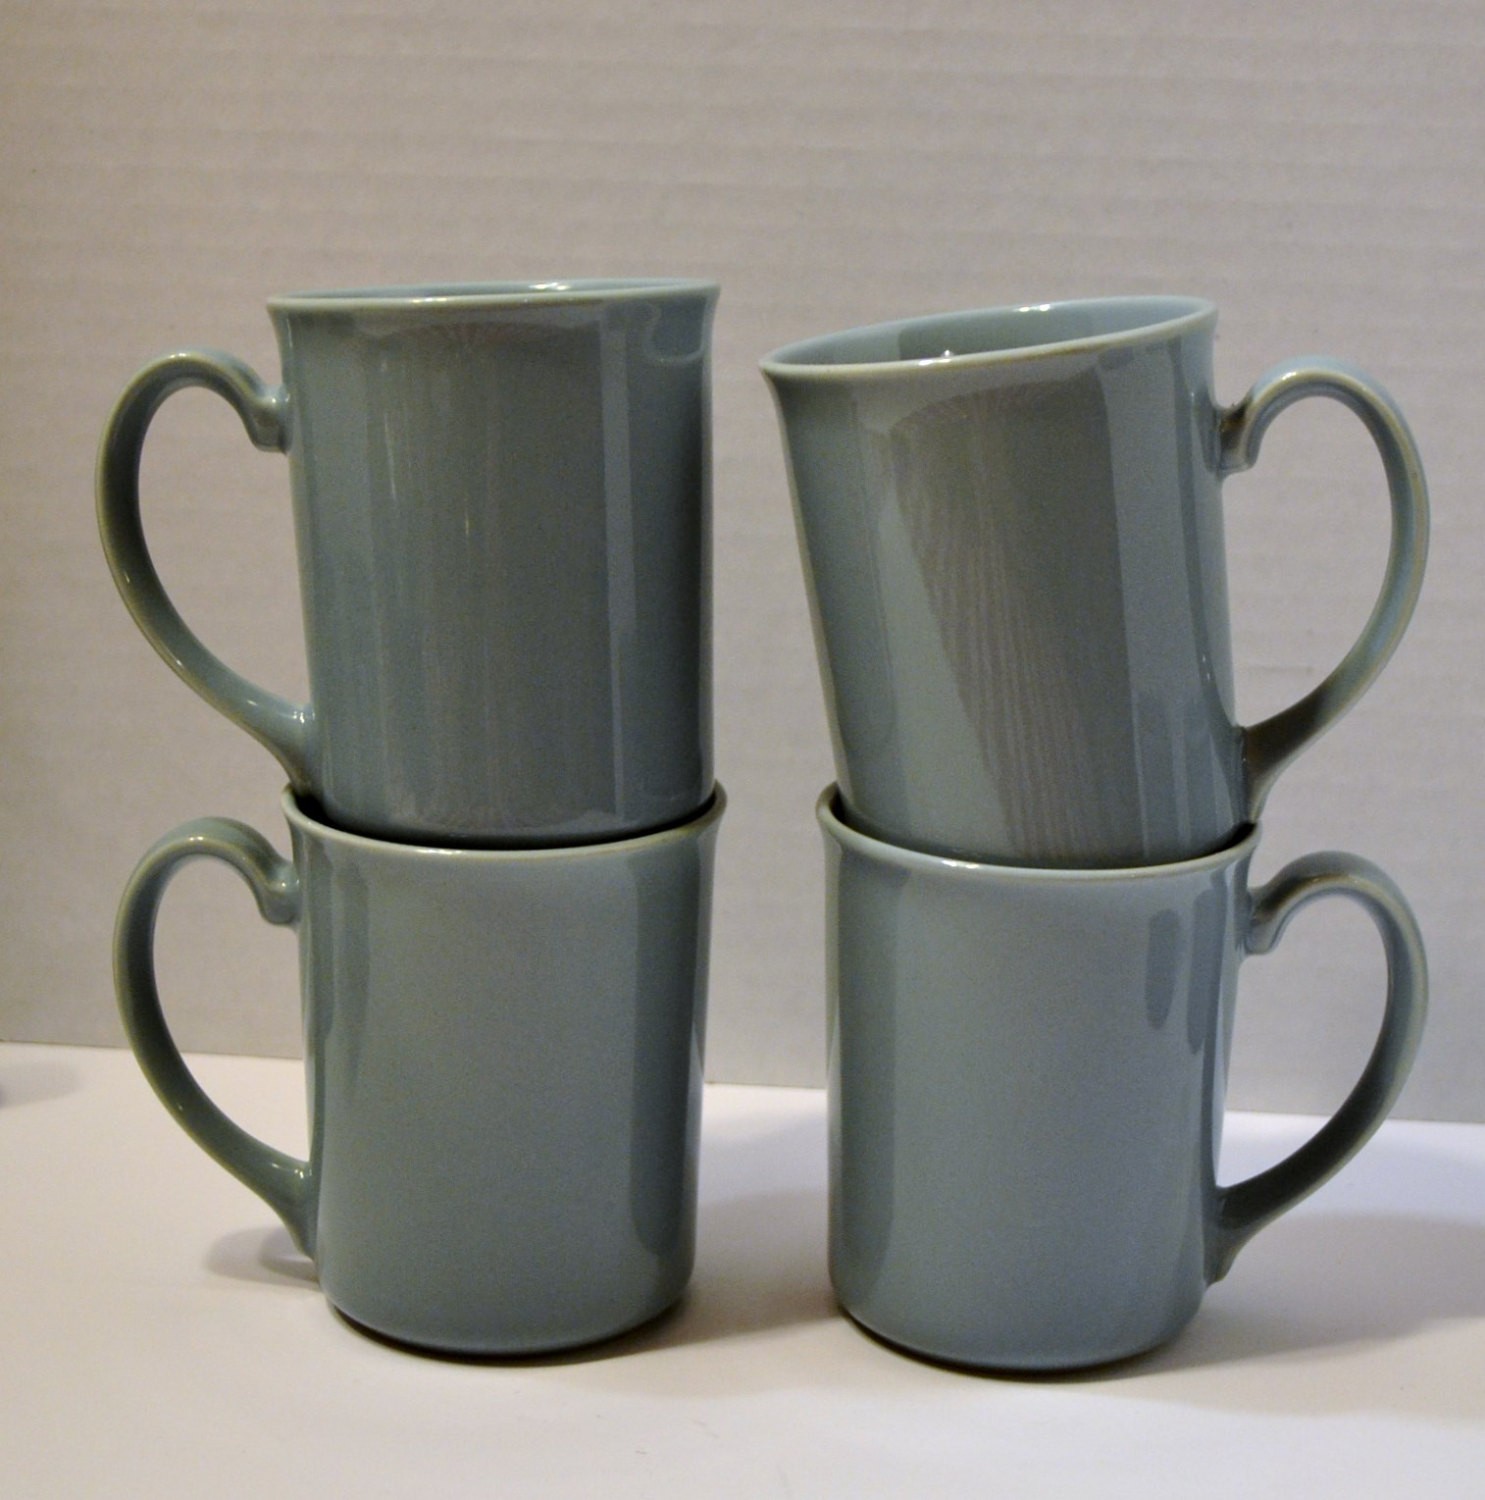 Vintage corning ware mugs set of 4 coffee cup teacup